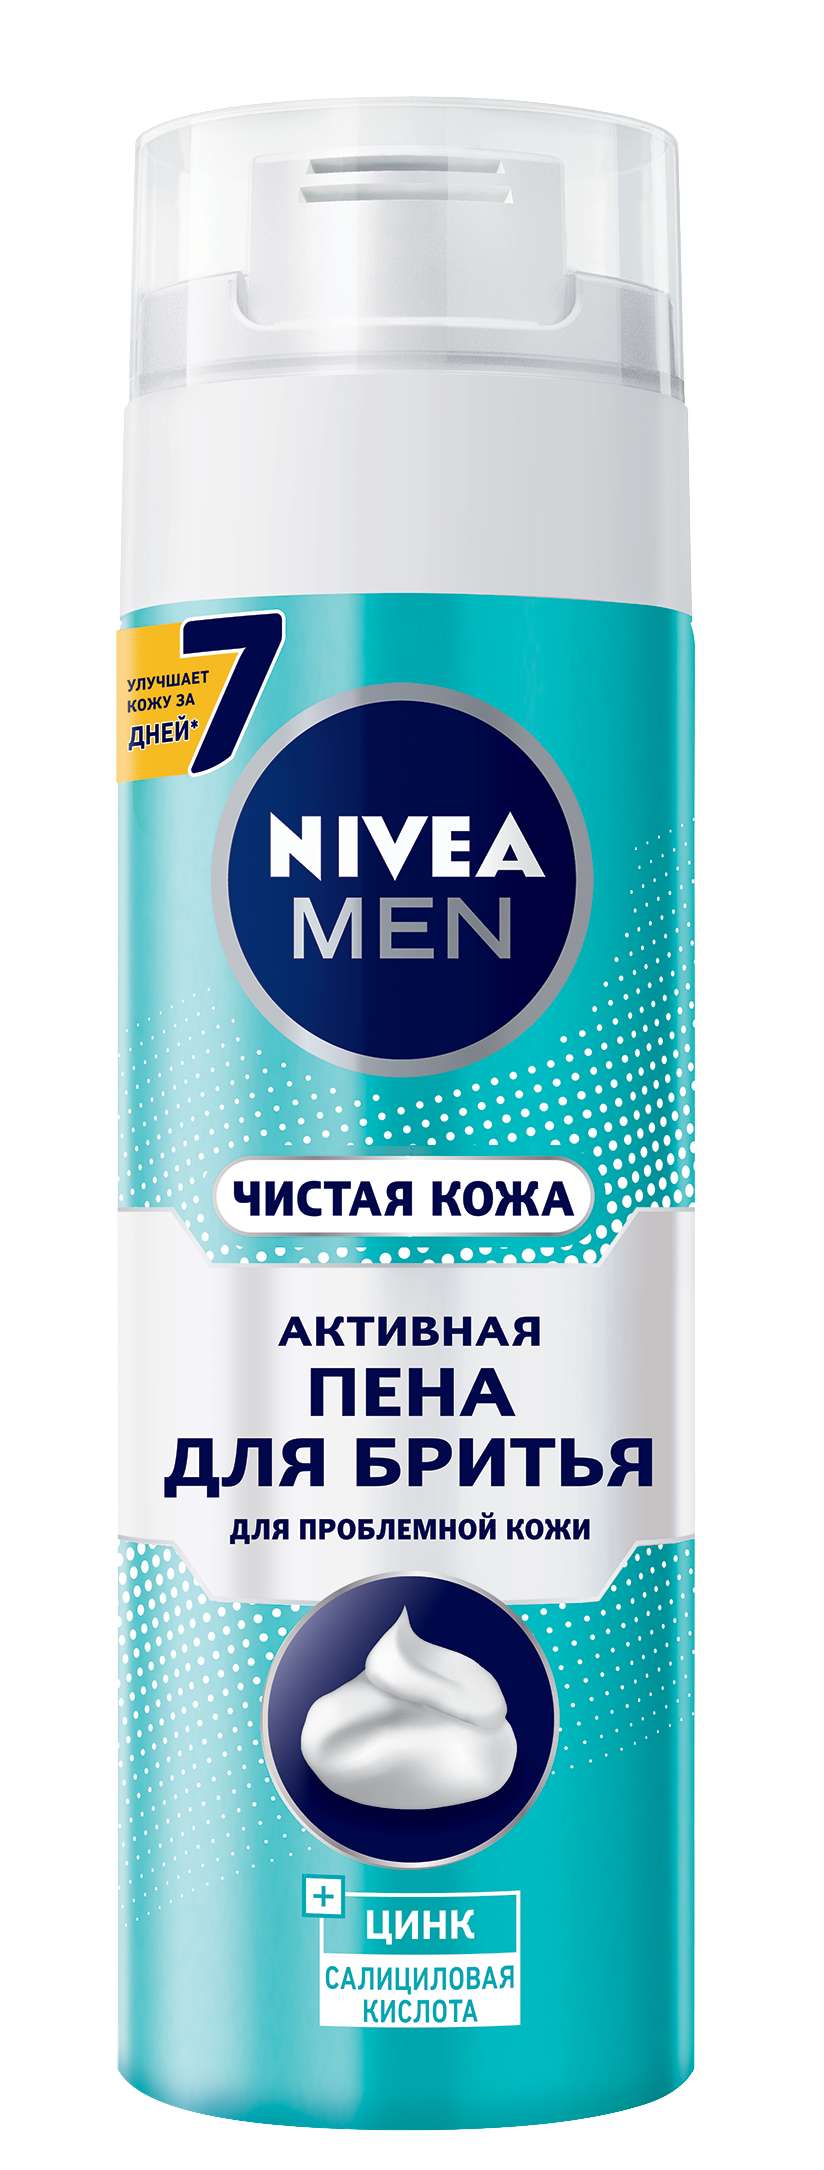 Пена для бритья Nivea Men Чистая кожа, 200 мл - фото 1